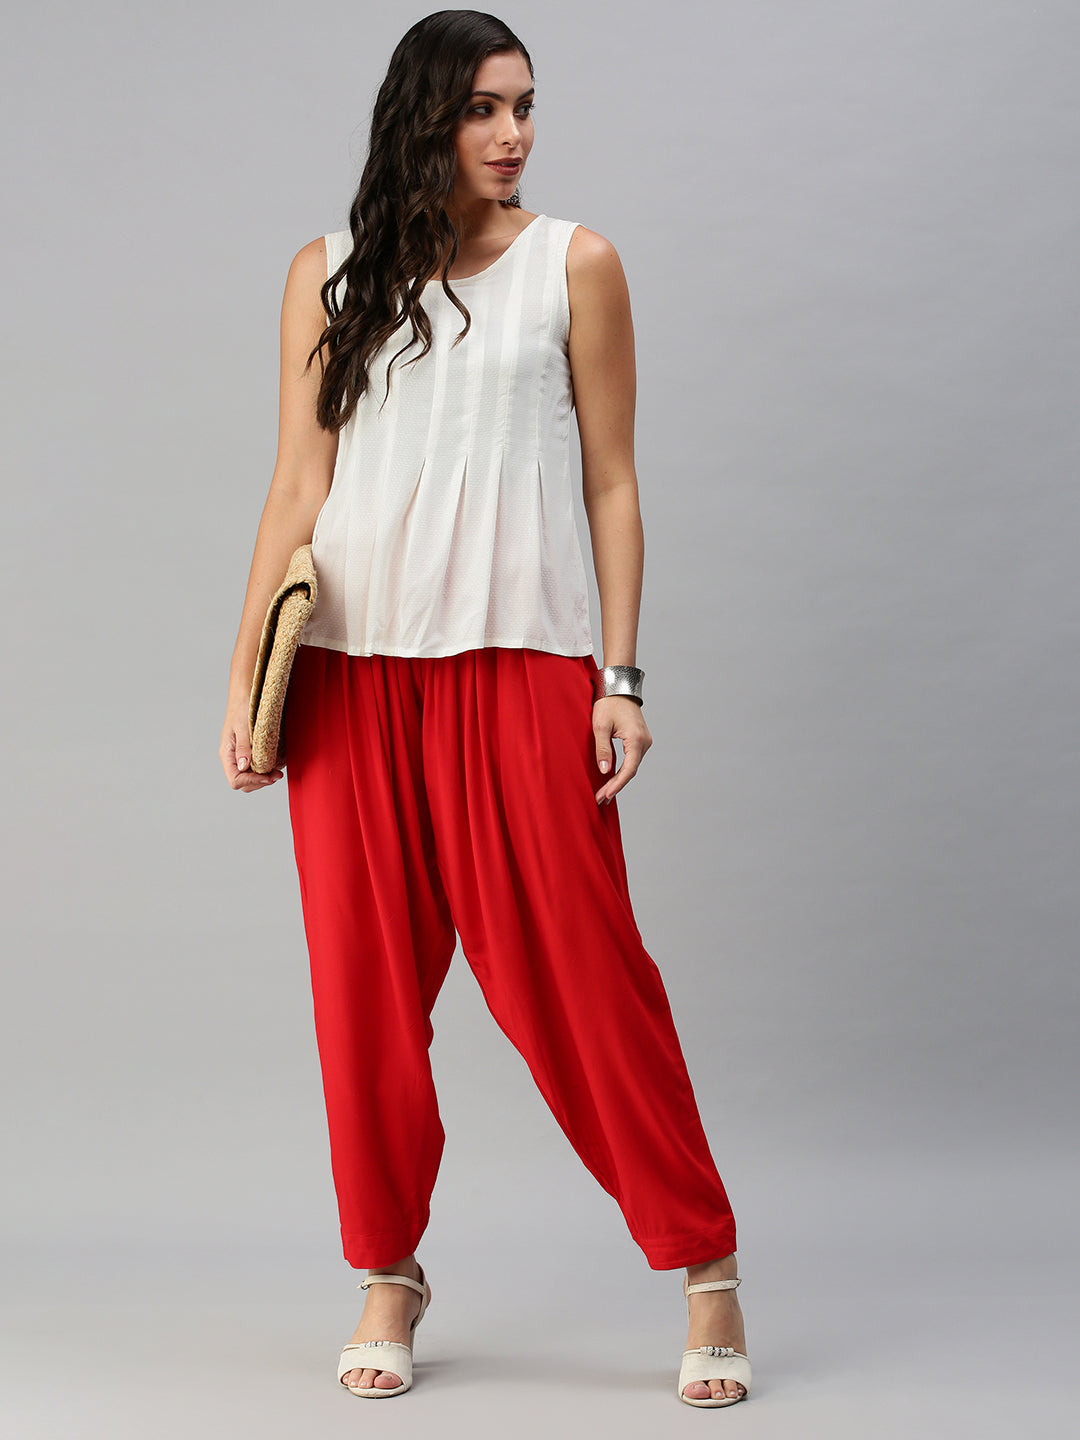 Buy Go Colors! Cream Regular Fit Dhoti Pants for Women Online @ Tata CLiQ